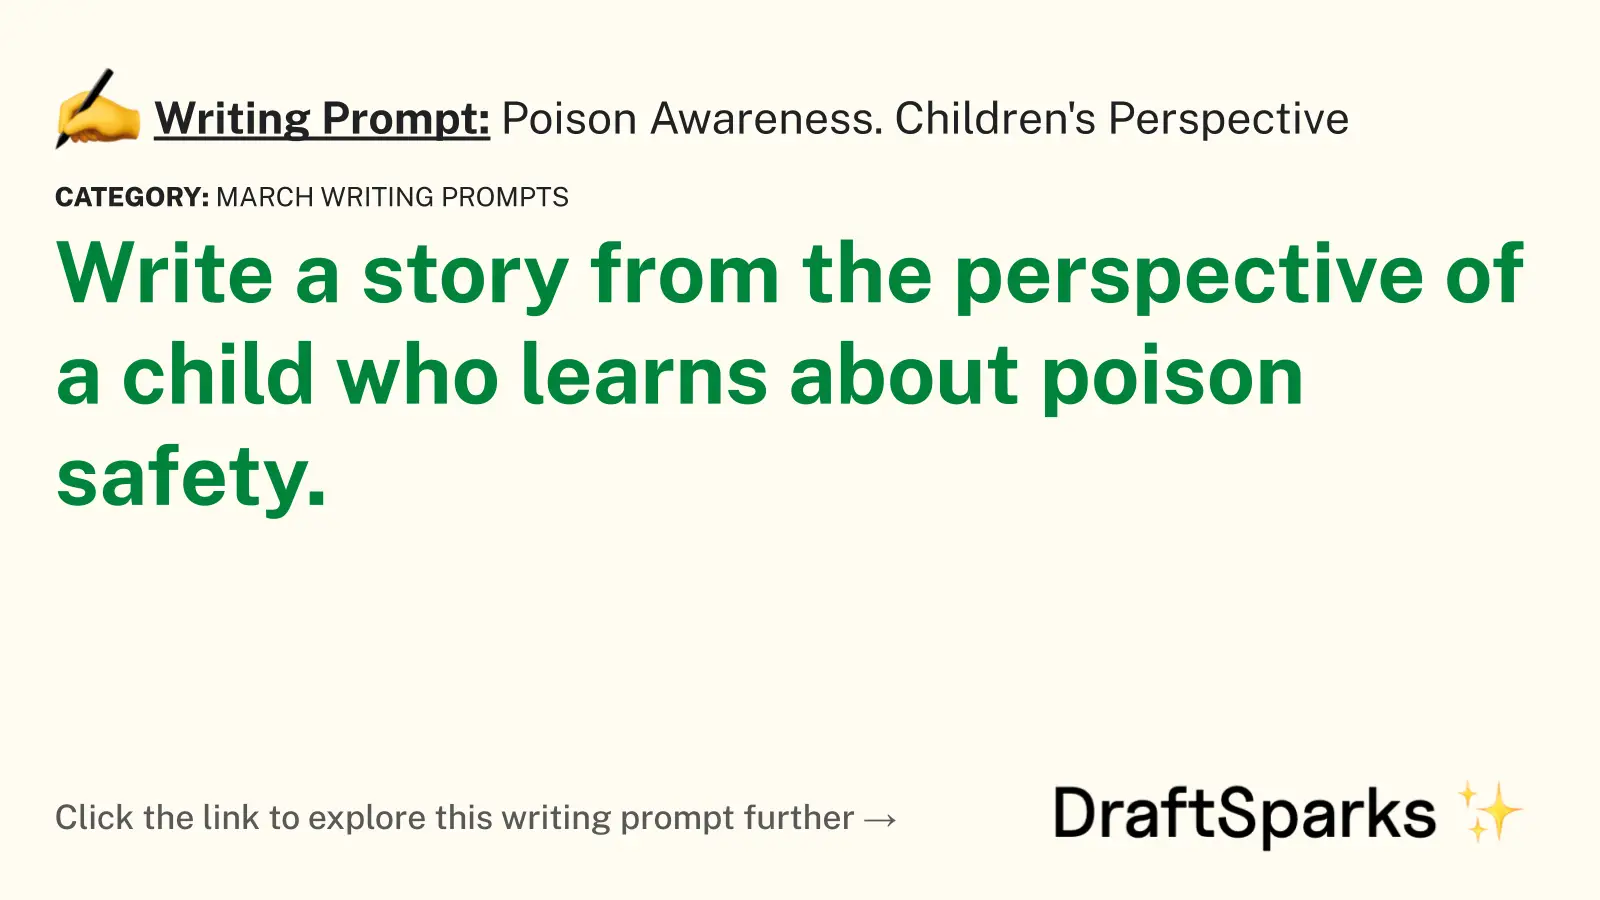 Poison Awareness. Children’s Perspective